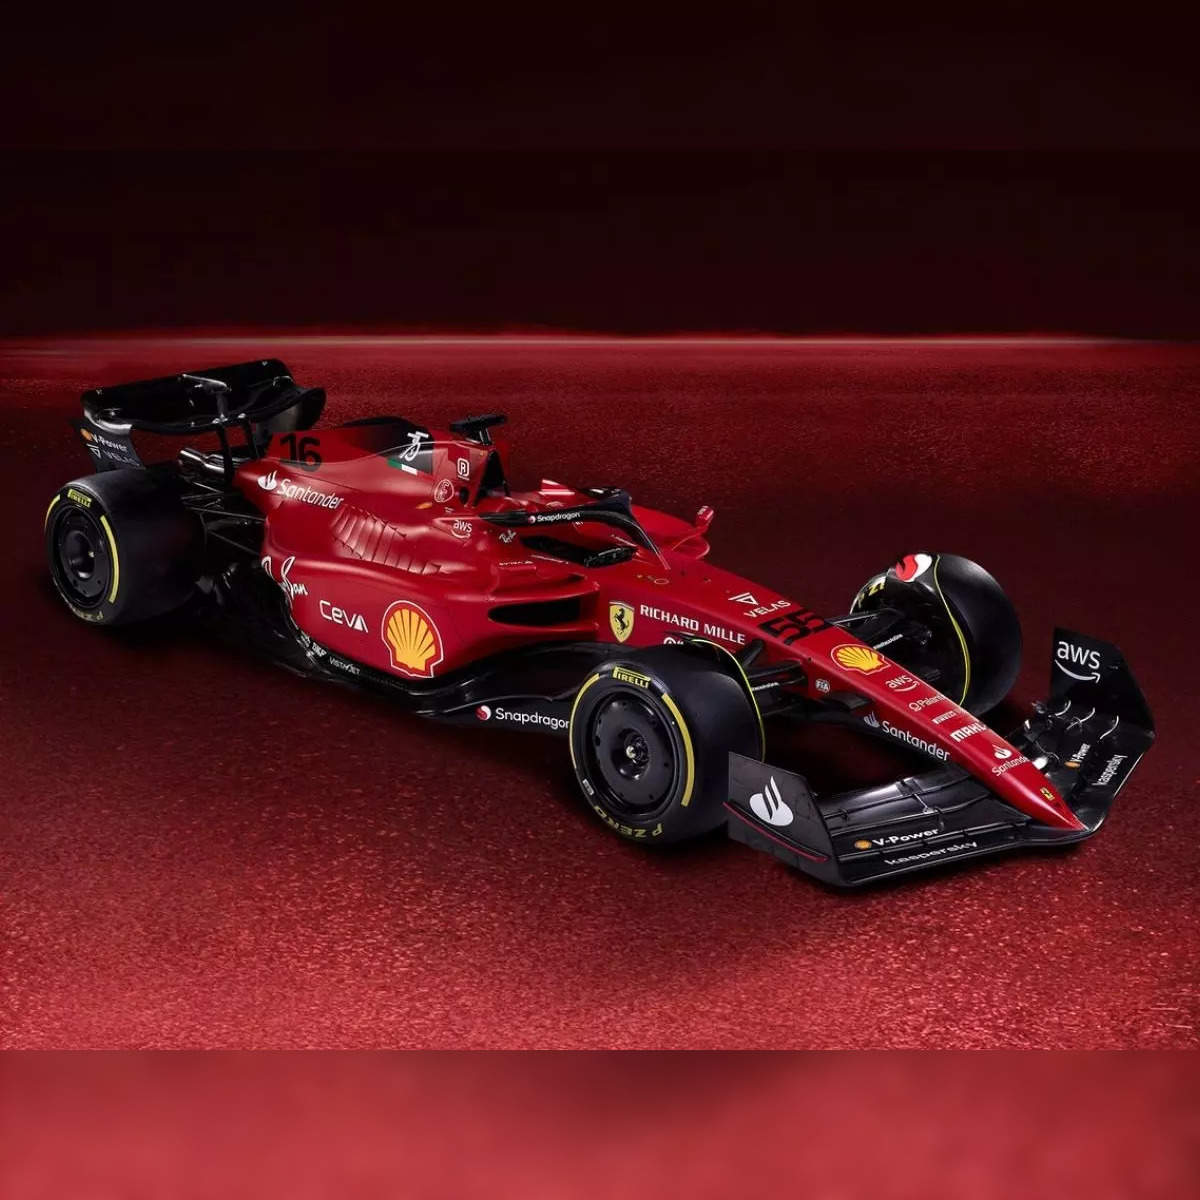 2022 Ferrari F1-75 Formula One race car makes debut